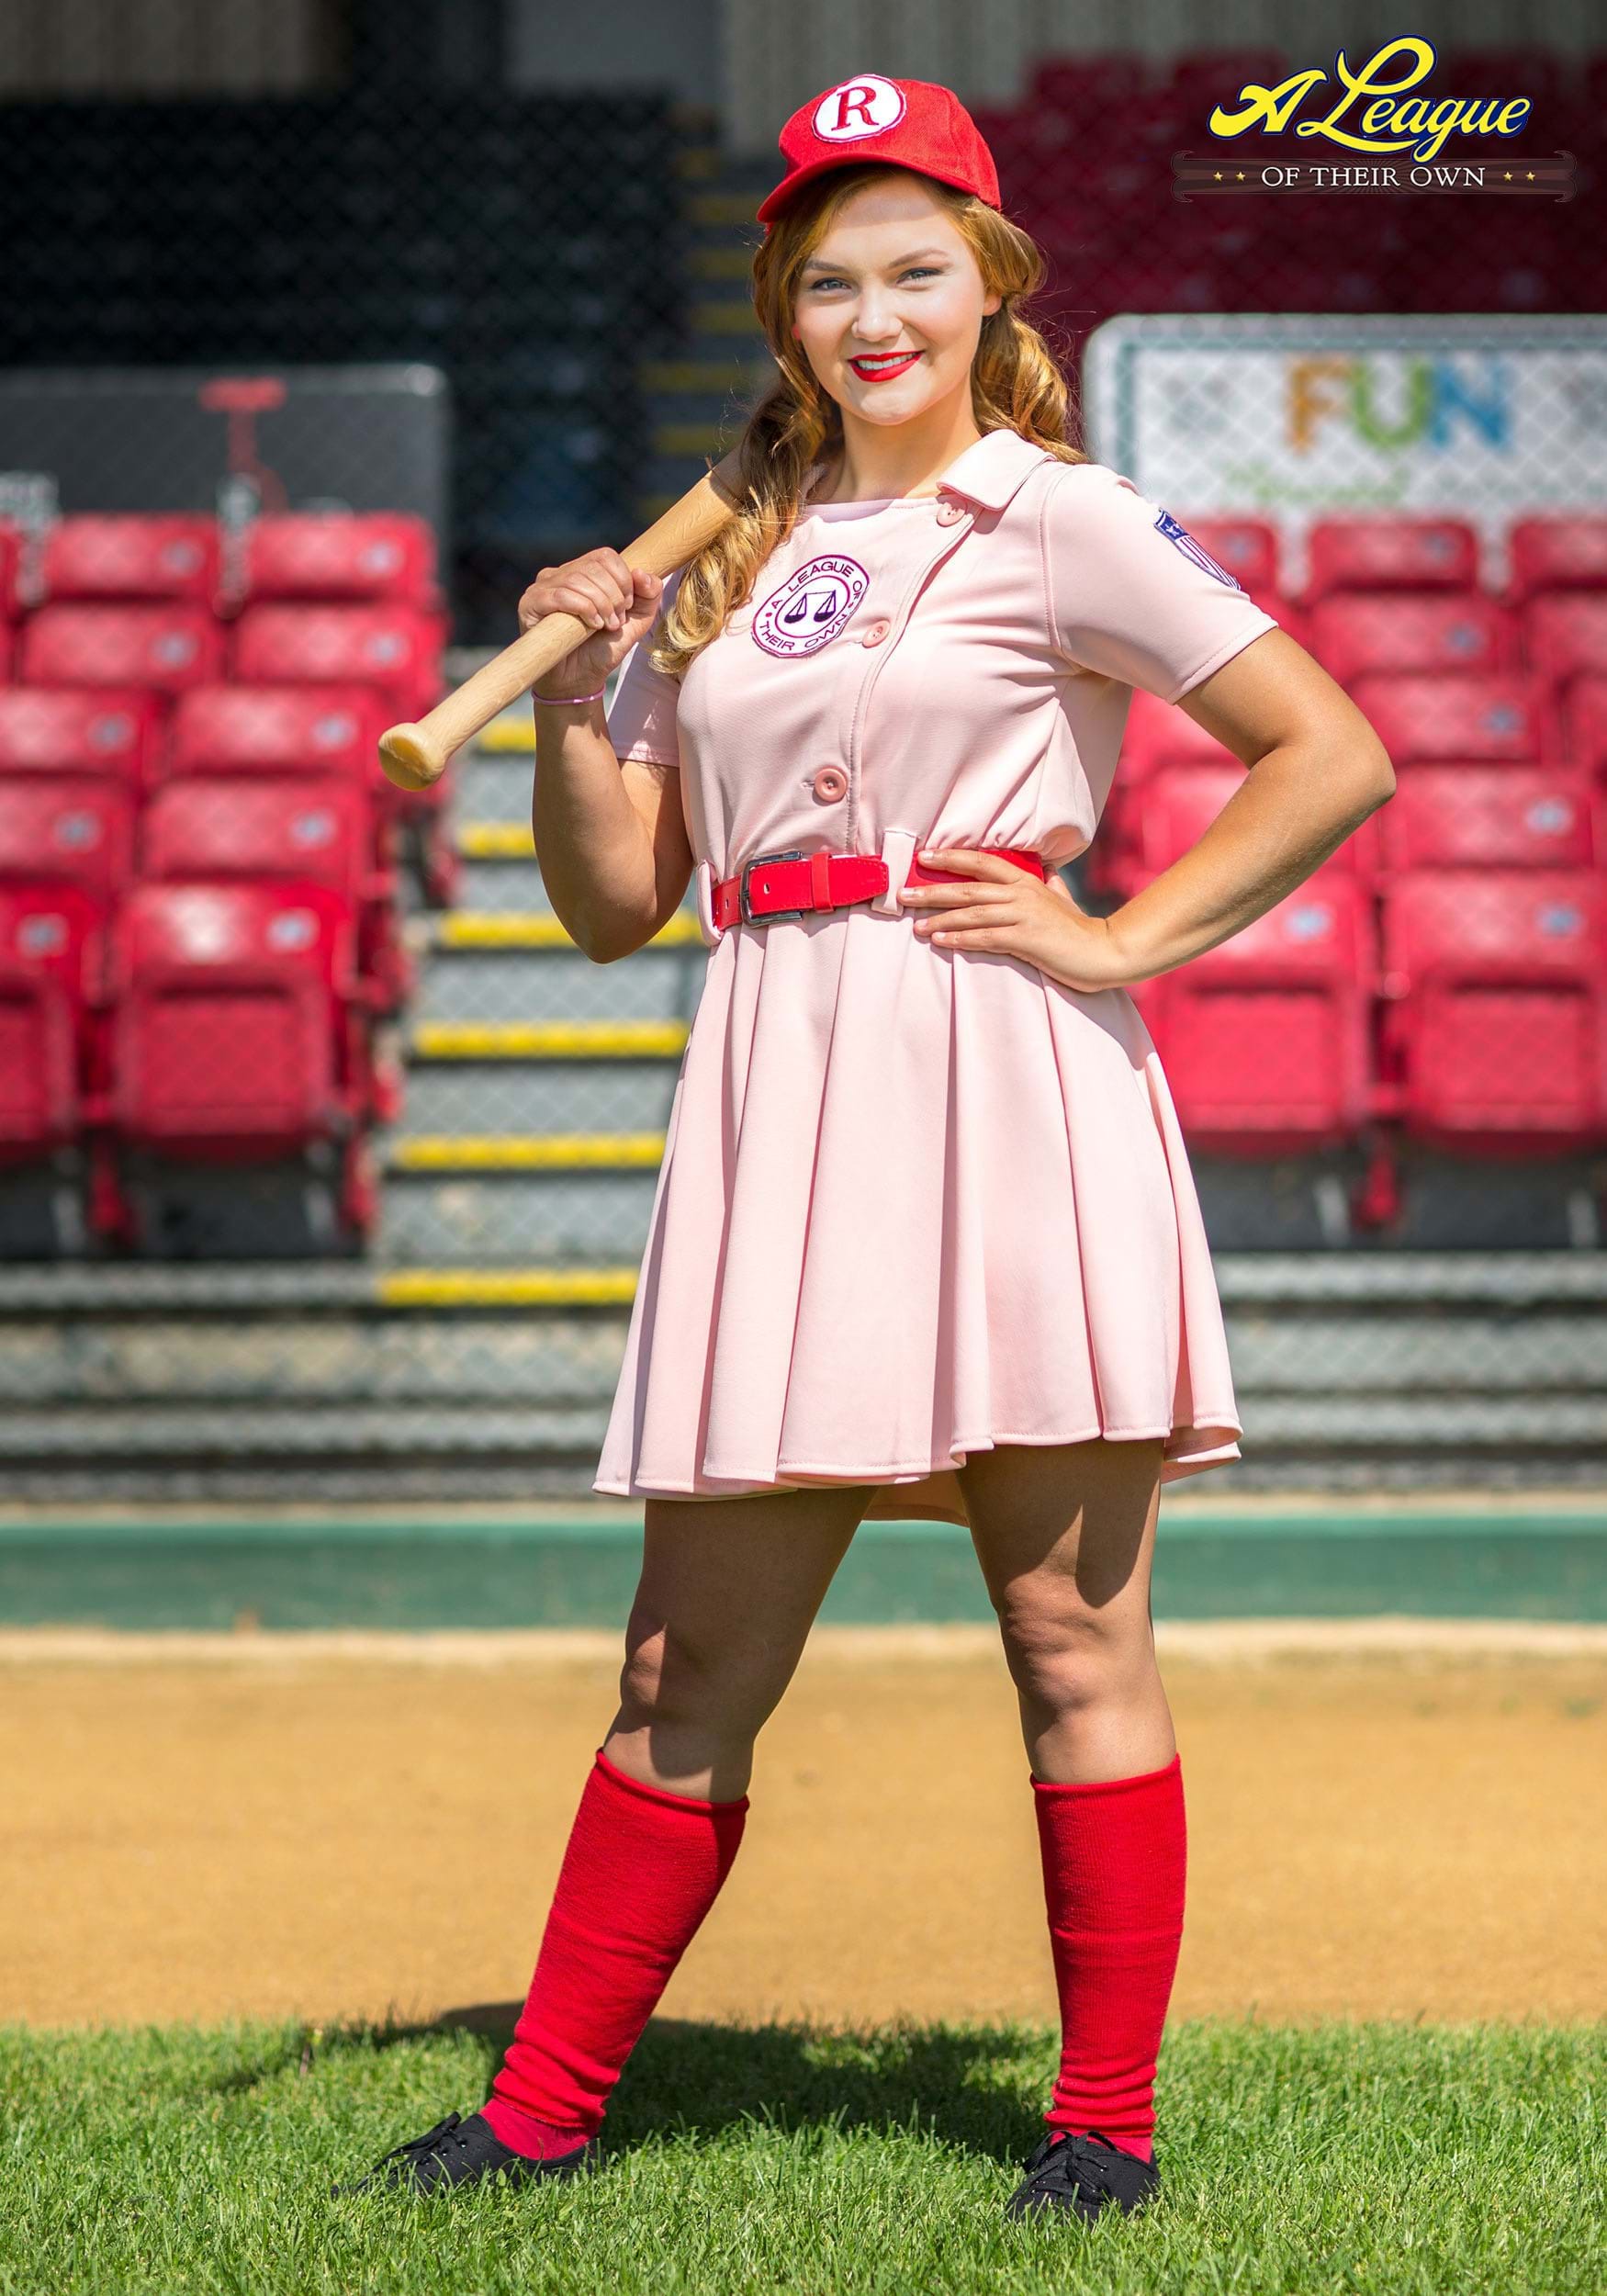 Rockford Peaches Women's Baseball League Costume